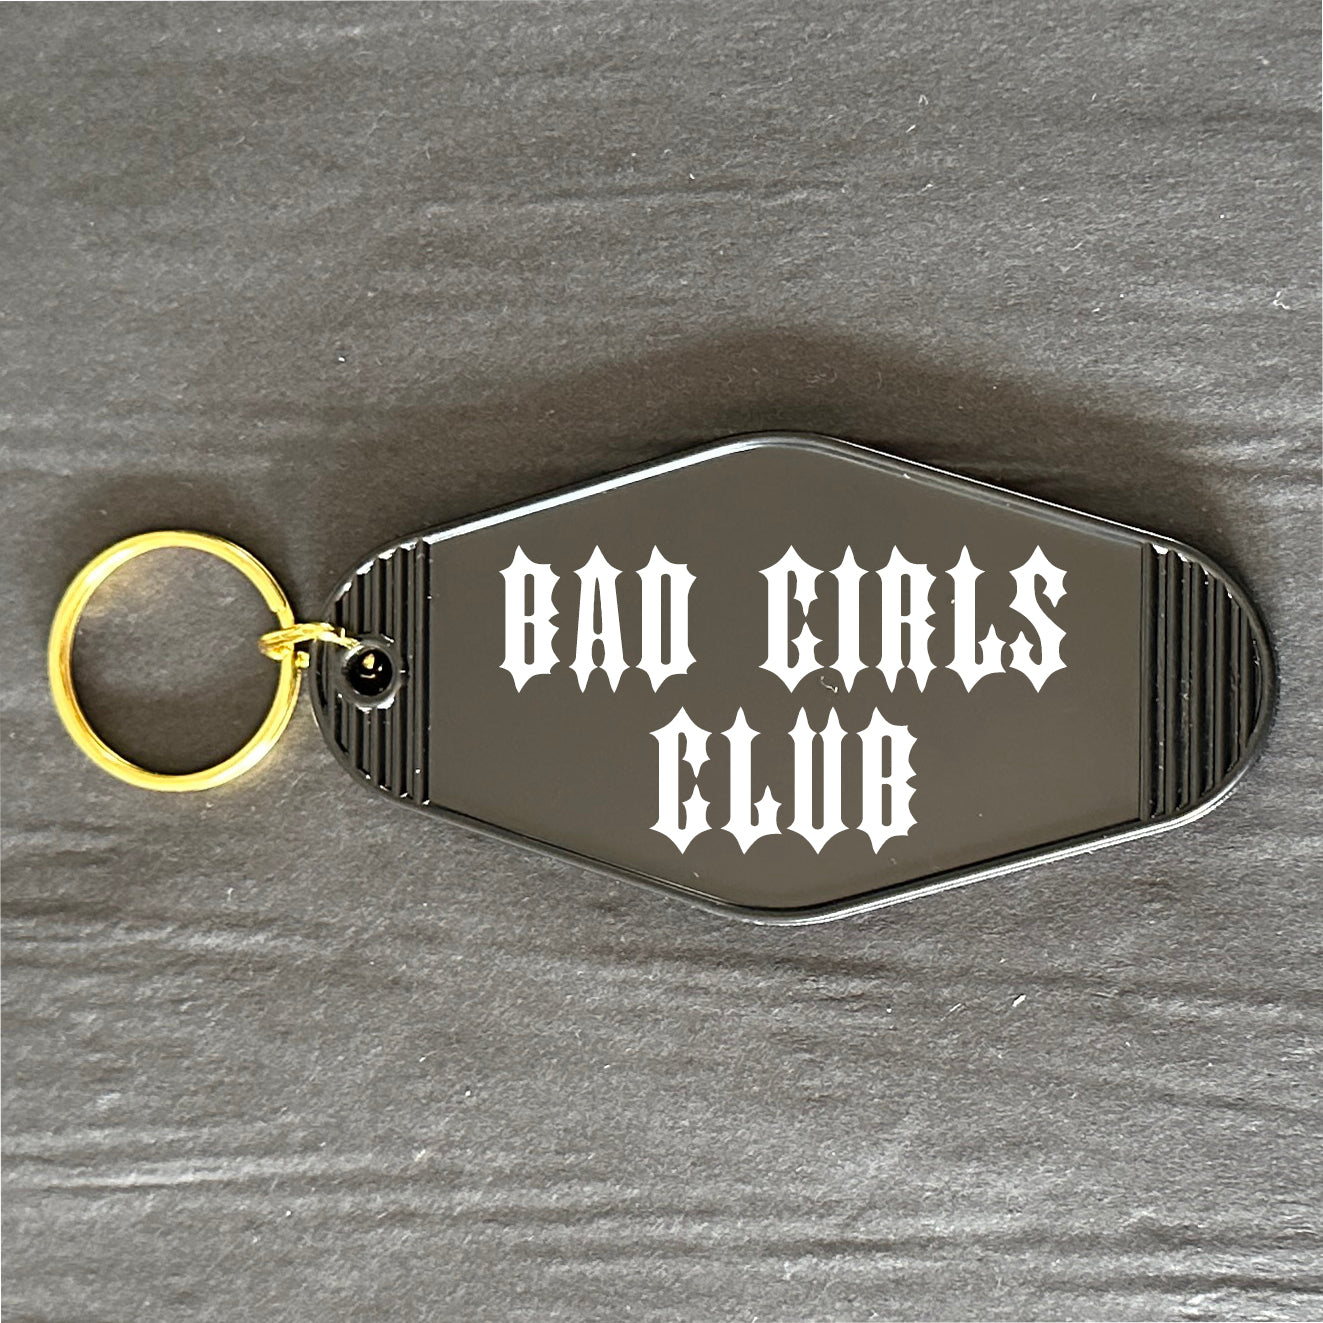 BAD GIRLS CLUB KEYRING